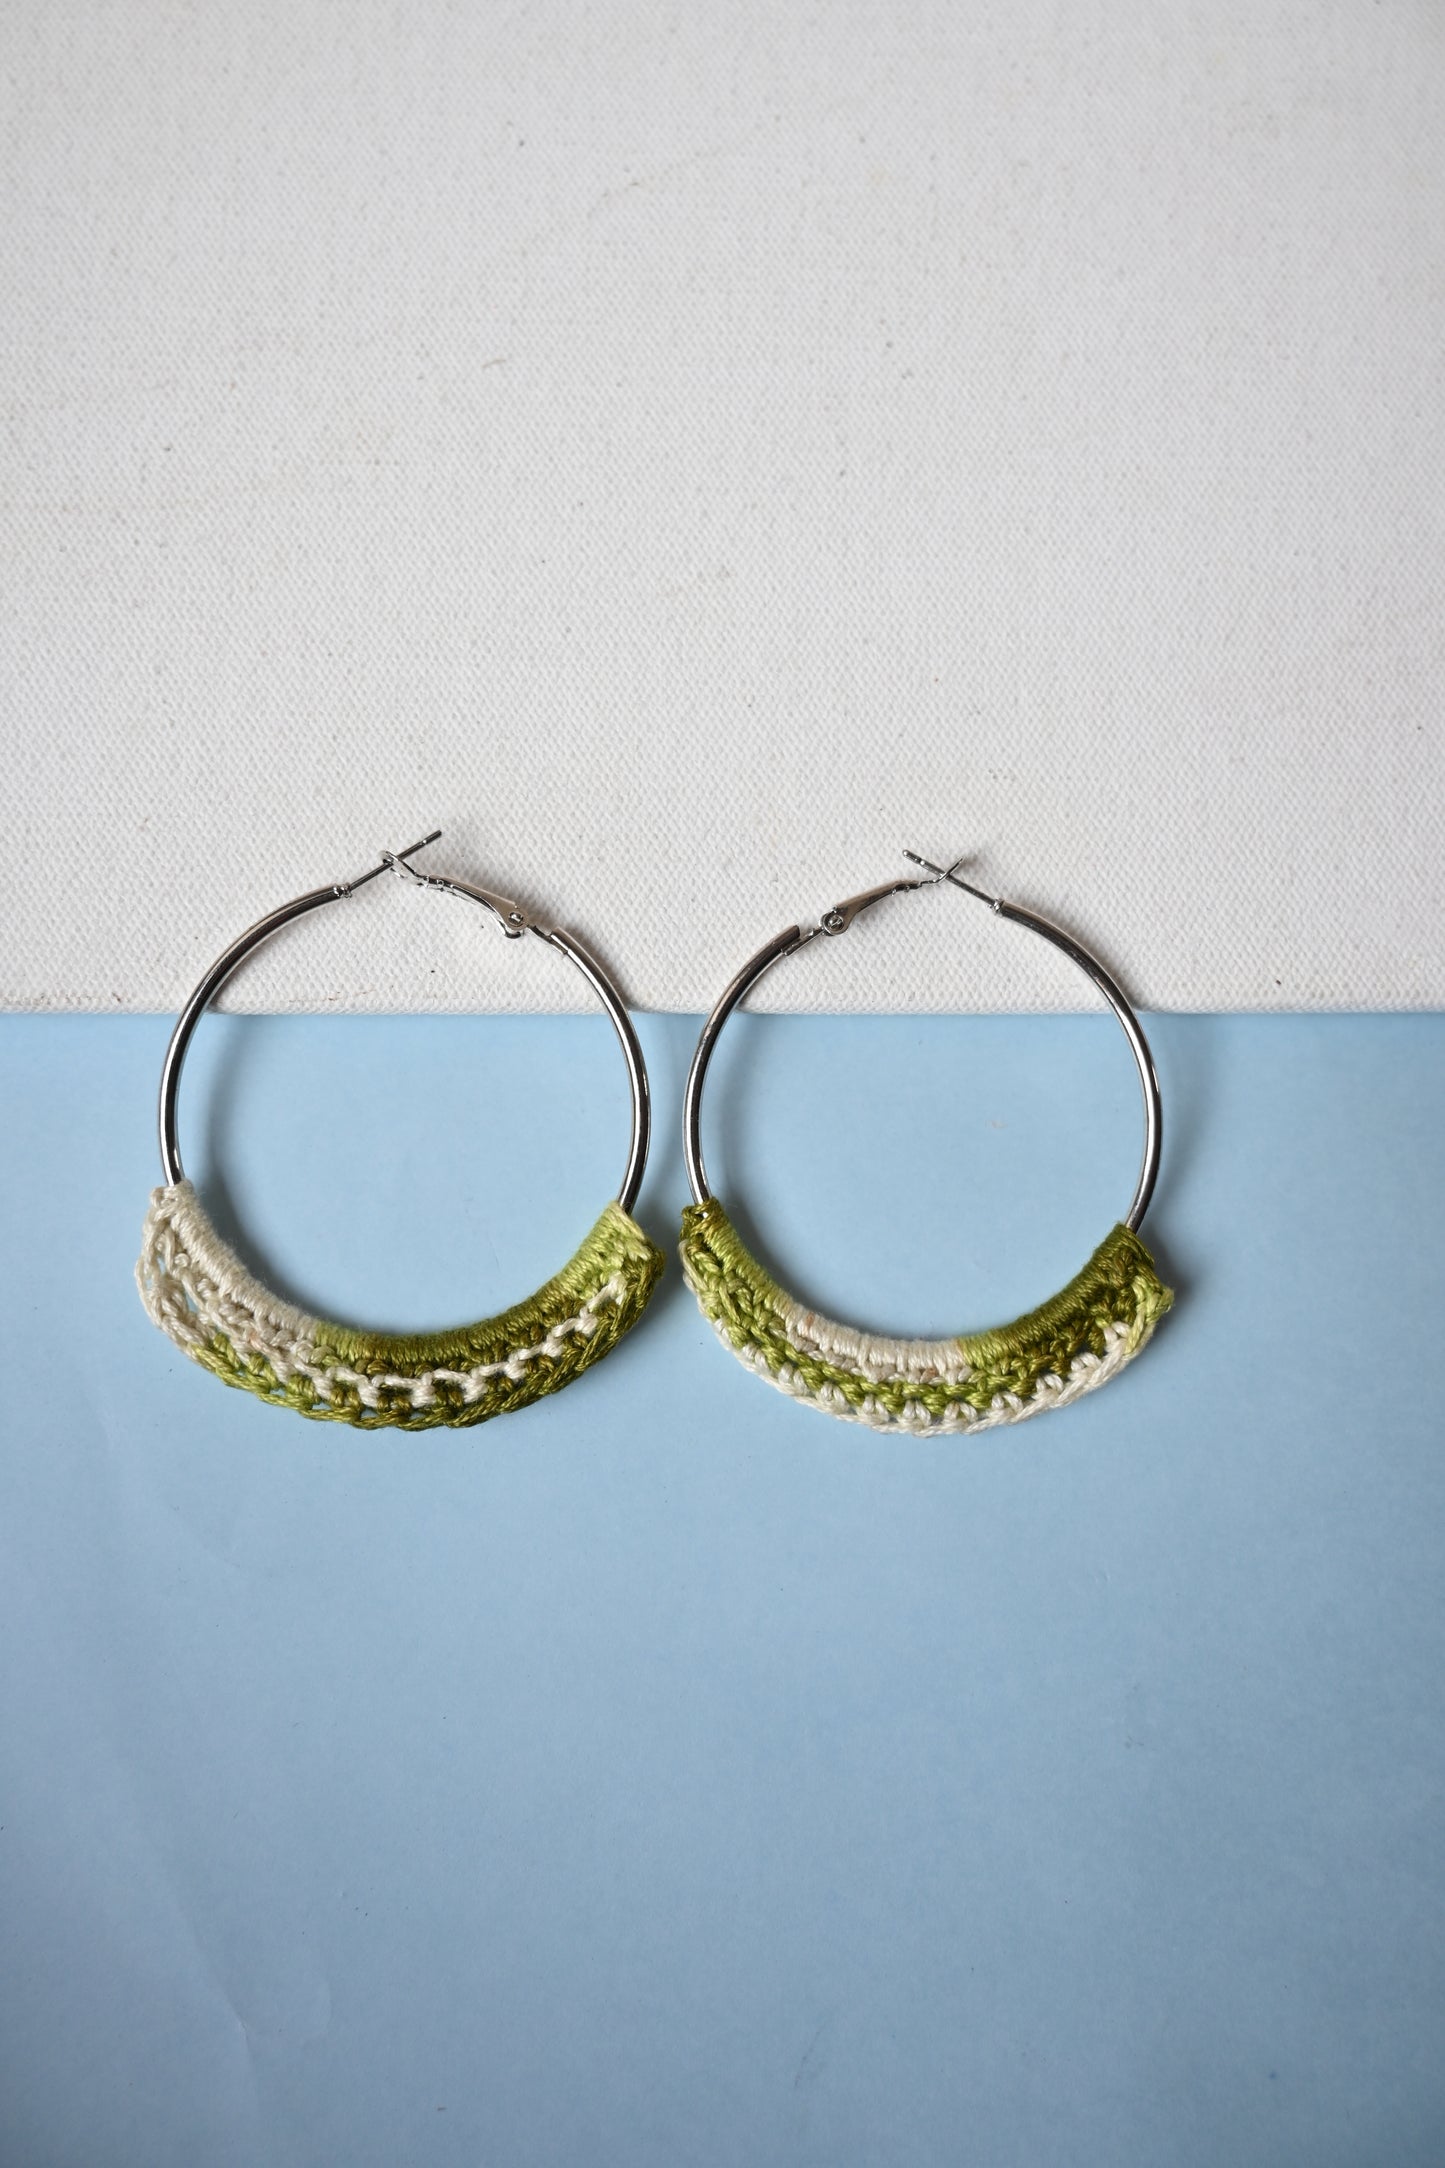 Olive tinted crochet earrings